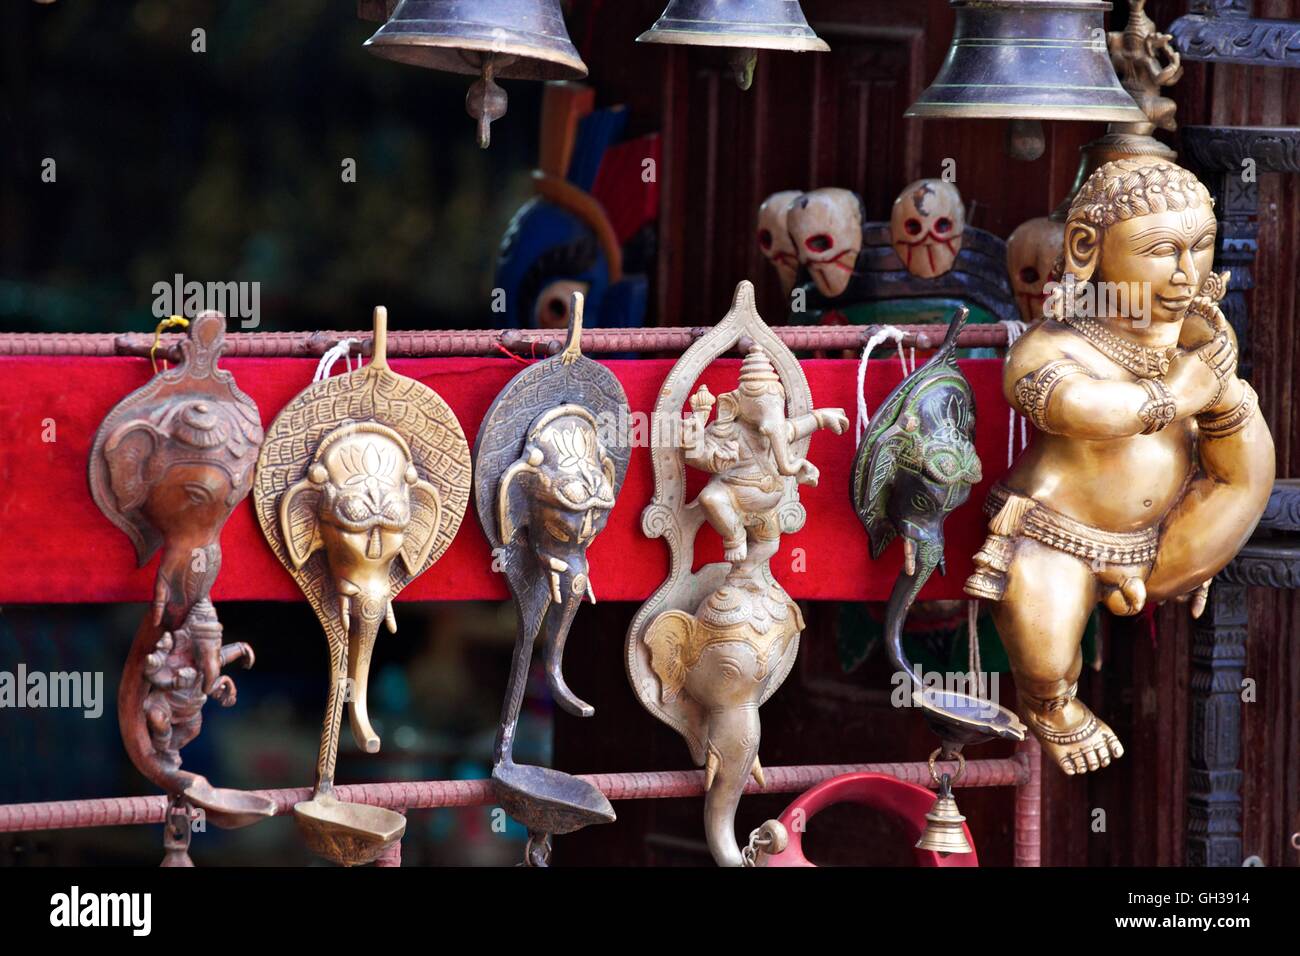 Hindu deities on sale at Swayambhunath Stupa or Monkey Temple, Kathmandu, Nepal, Asia Stock Photo